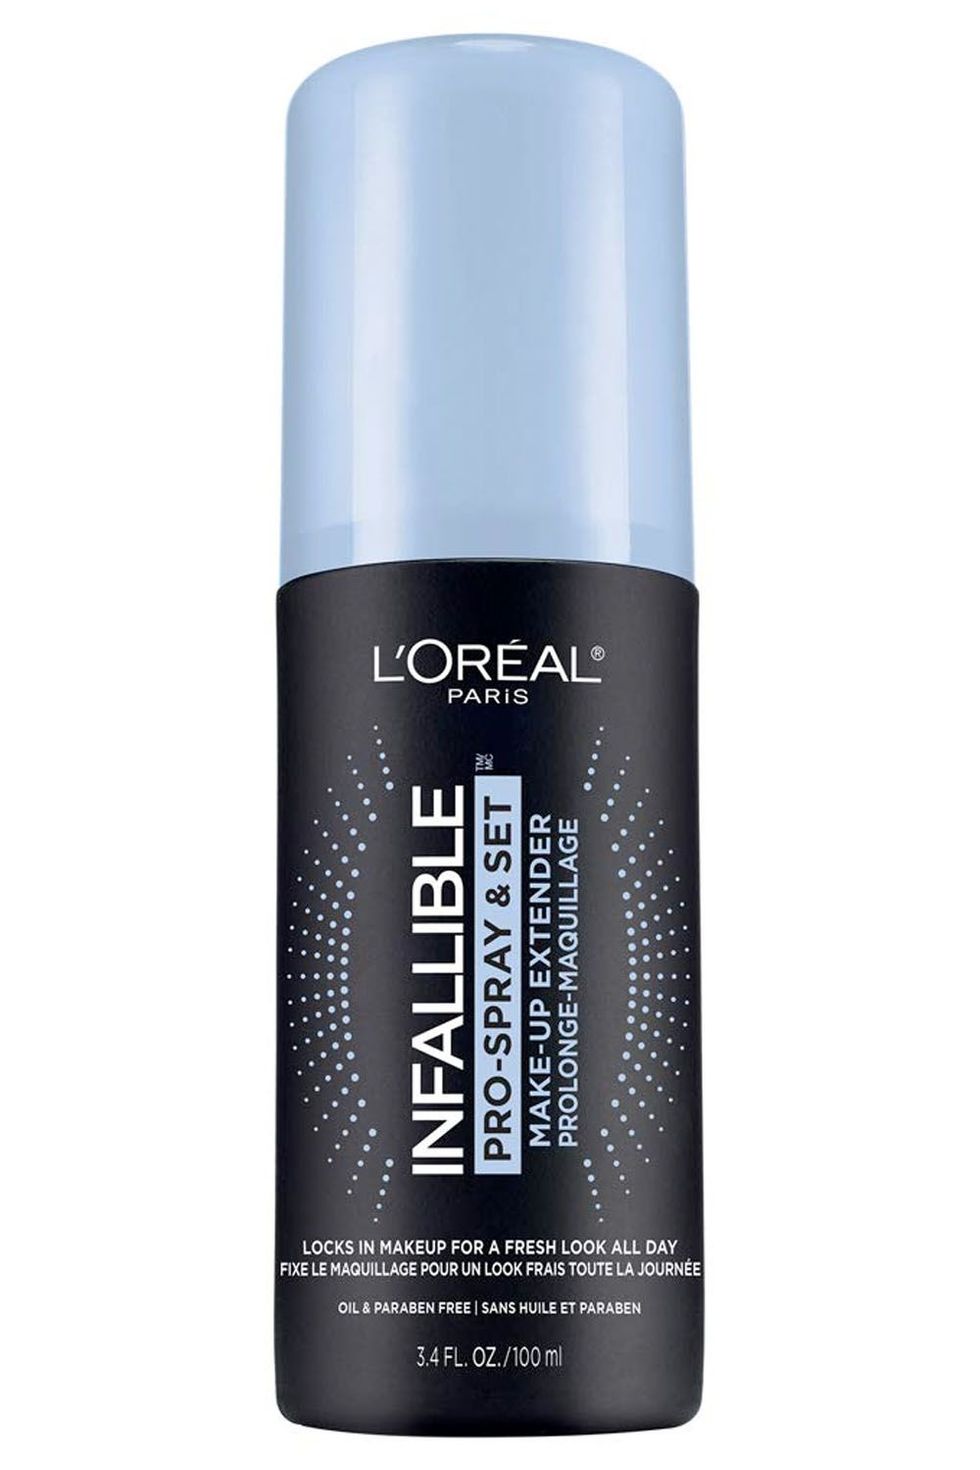 L'Oreal Paris Pro-Spray and Set Make-Up Oil-Free Setting Spray